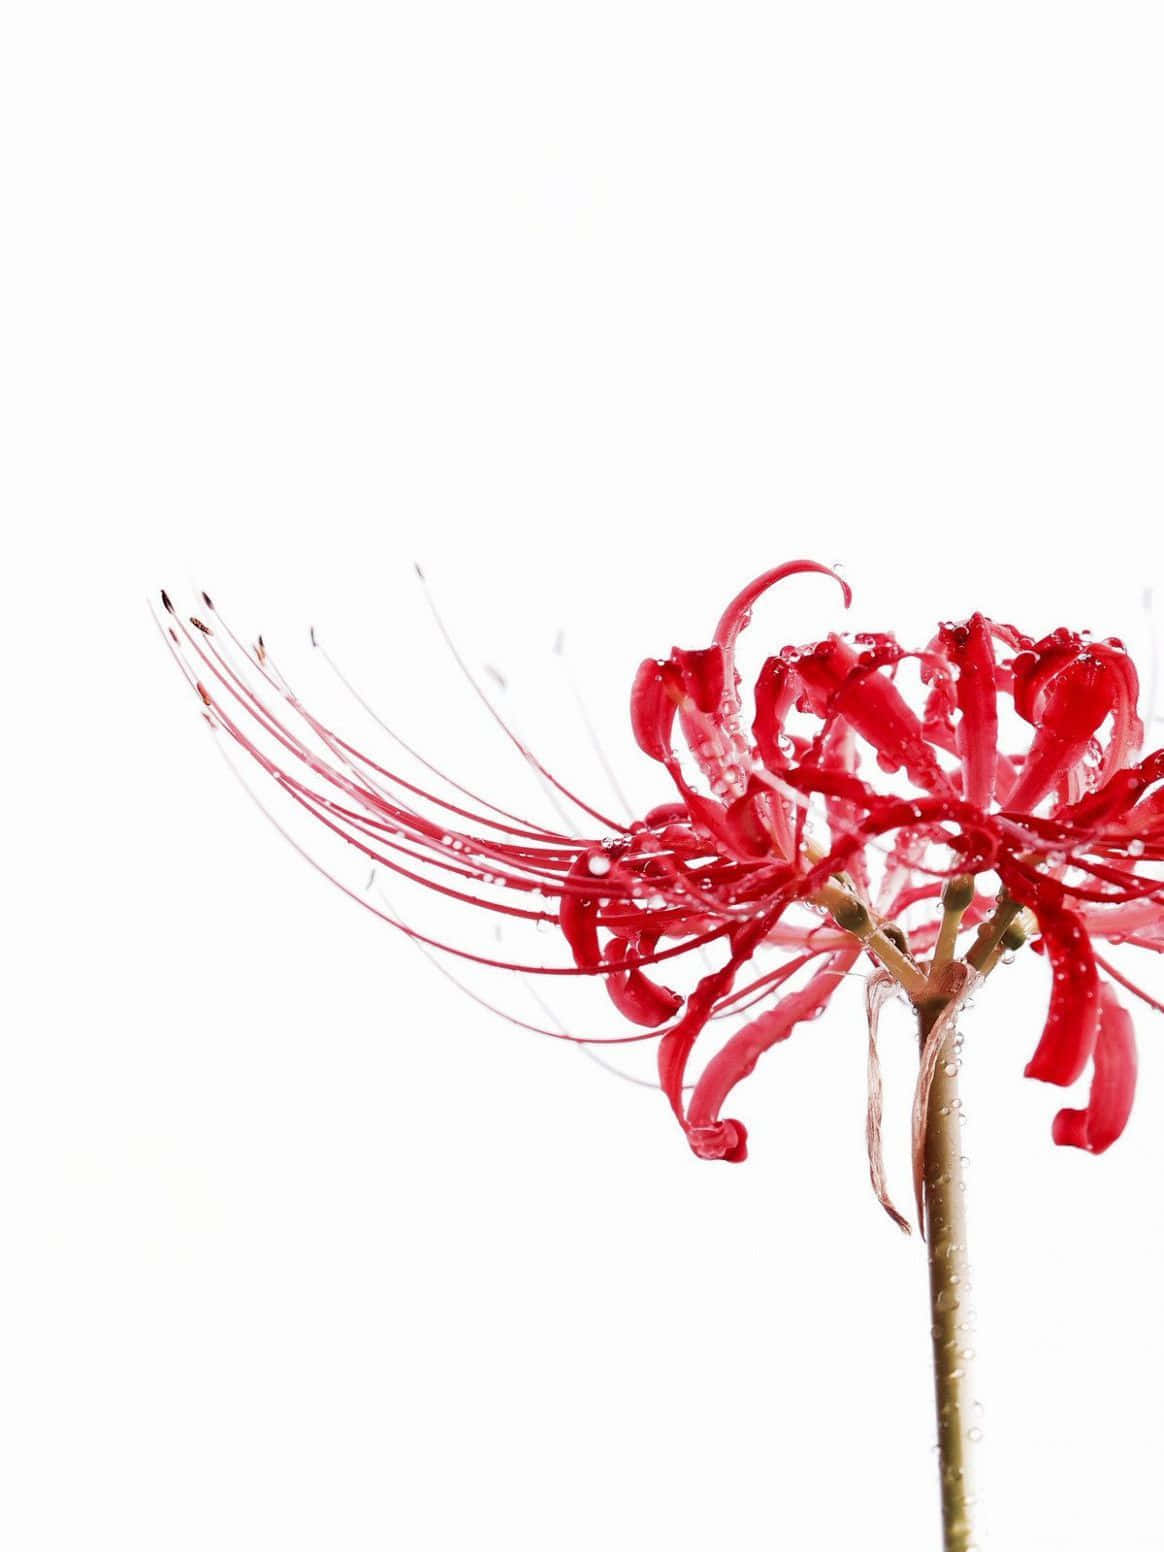 Red Spider Lily Hard Enamel Pins by Vi D. — Kickstarter